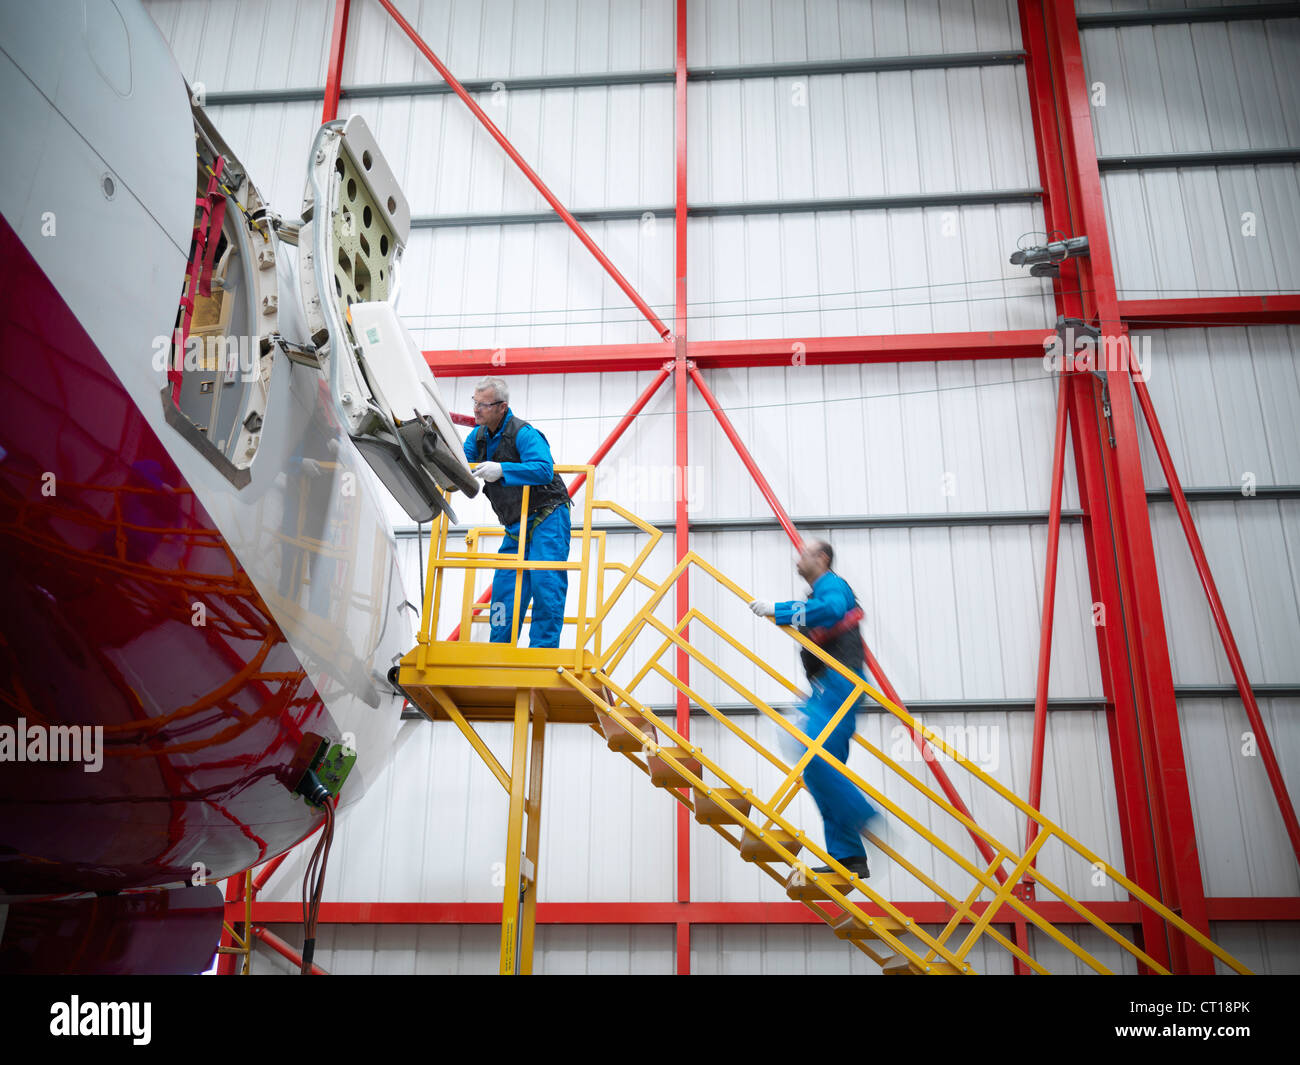 Workers examining airplane in hangar Stock Photo